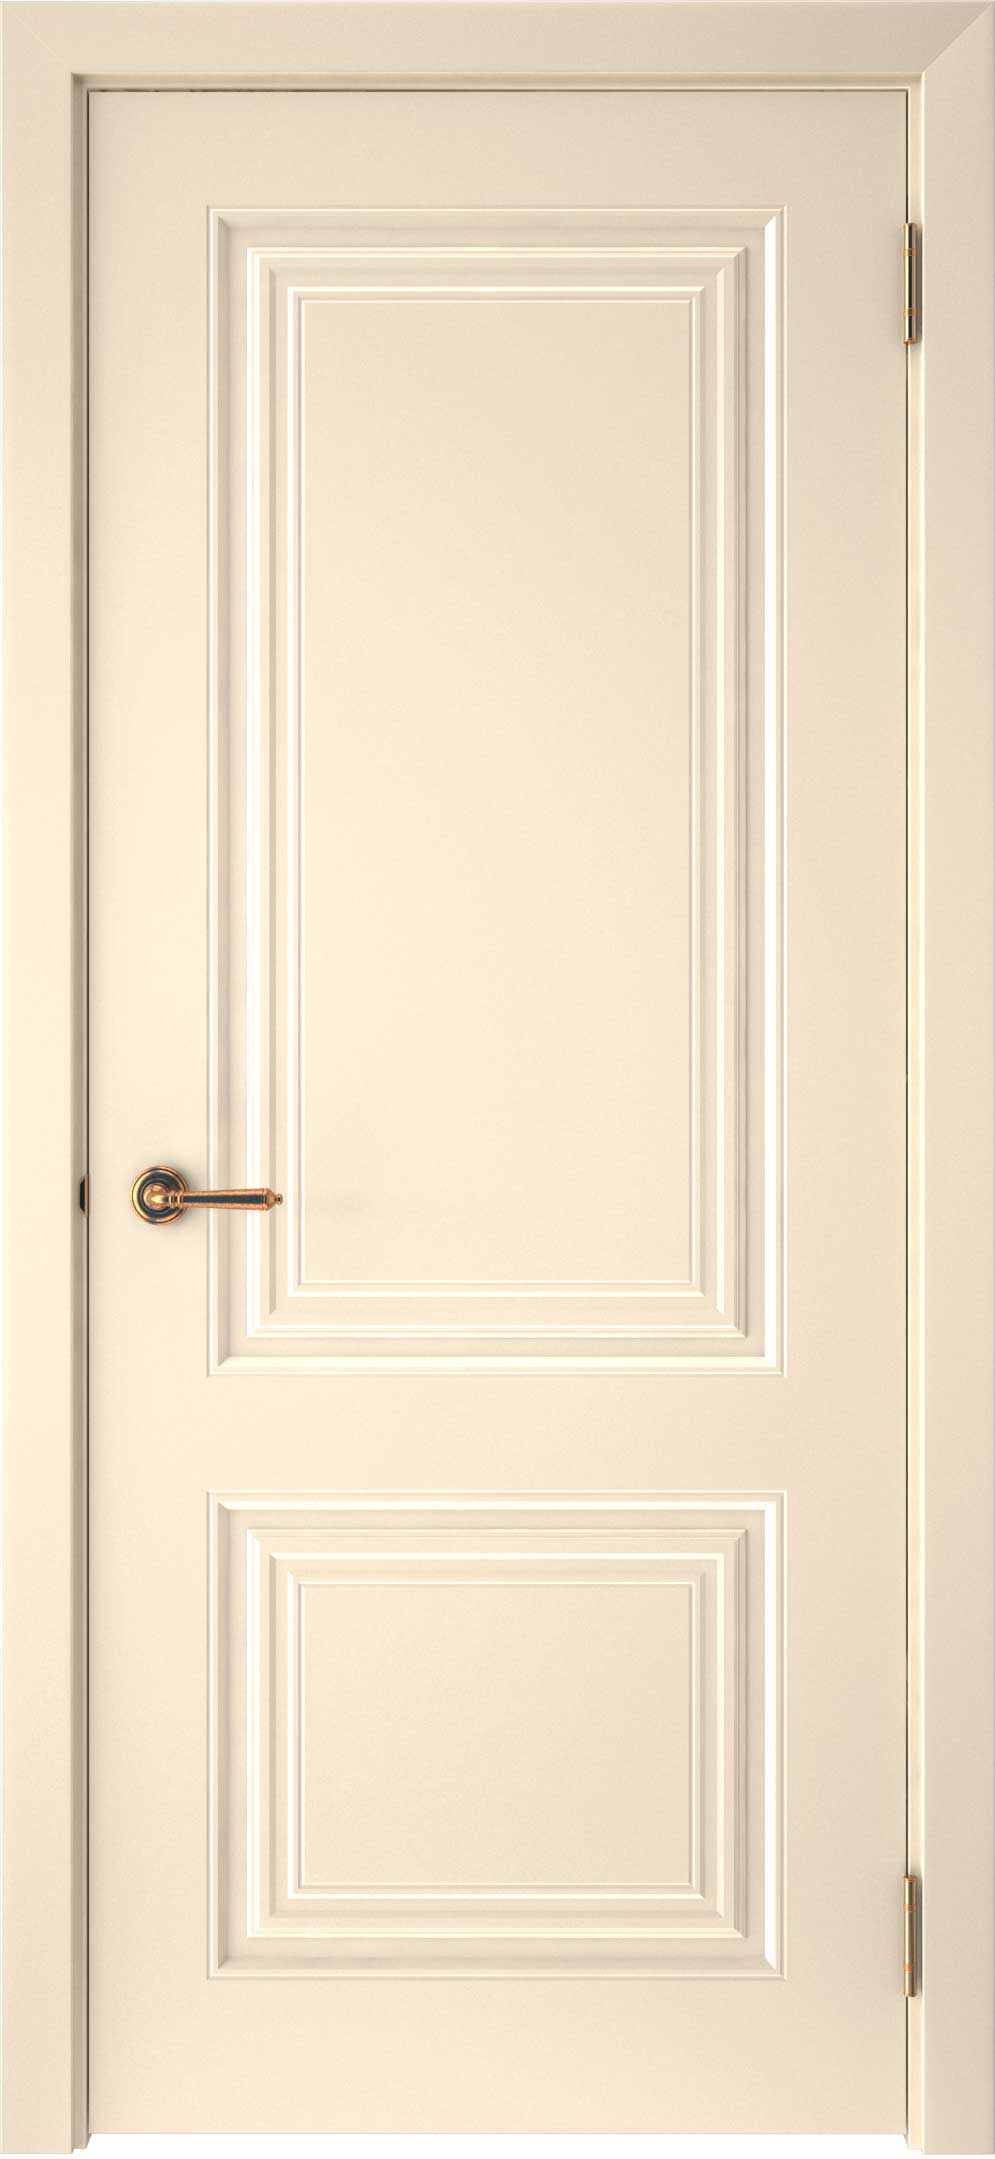 Двери крашеные (Эмаль) ТЕКОНА Смальта-42 глухое Ваниль ral размер 200 х 80 см. артикул F0000092480